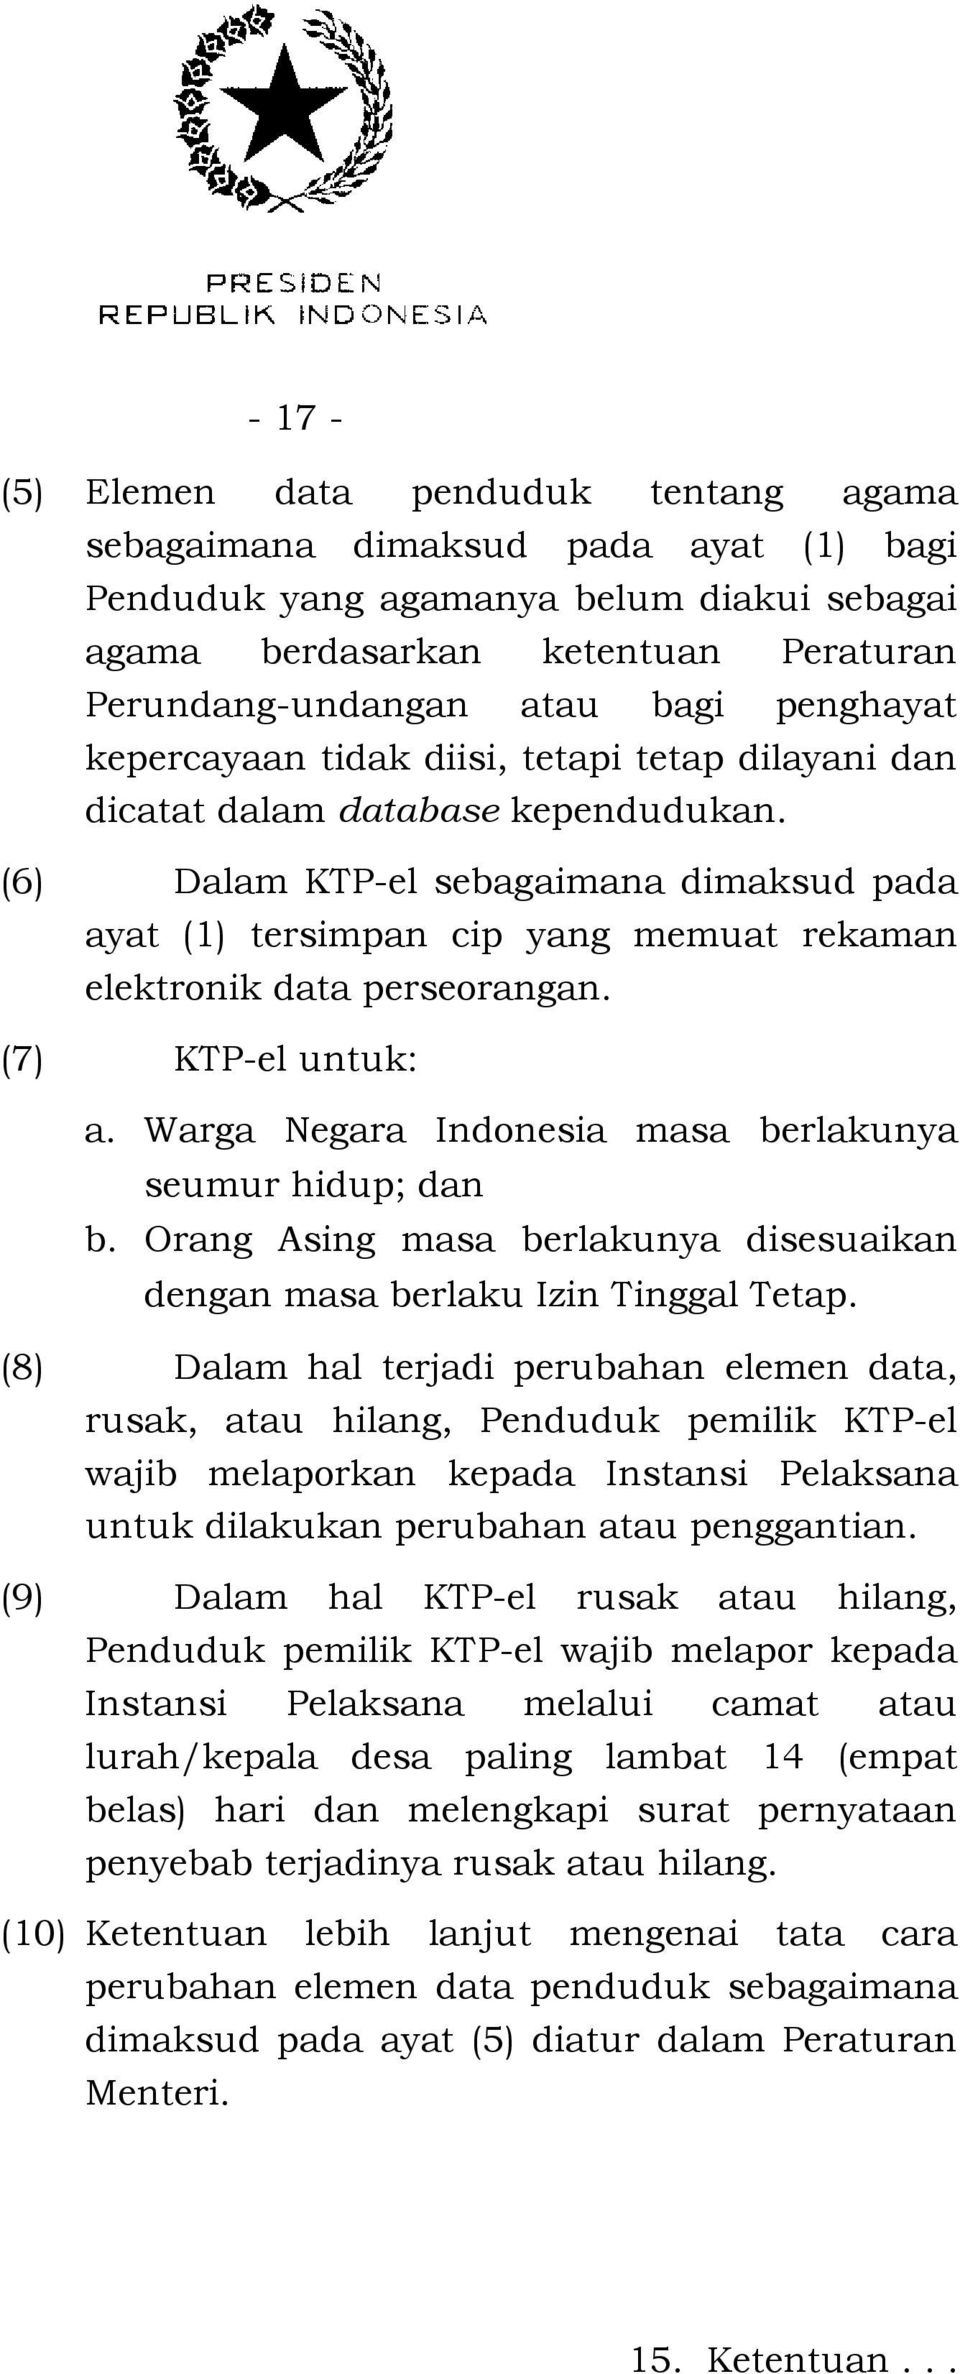 (6) Dalam KTP-el sebagaimana dimaksud pada ayat (1) tersimpan cip yang memuat rekaman elektronik data perseorangan. (7) KTP-el untuk: a. Warga Negara Indonesia masa berlakunya seumur hidup; dan b.